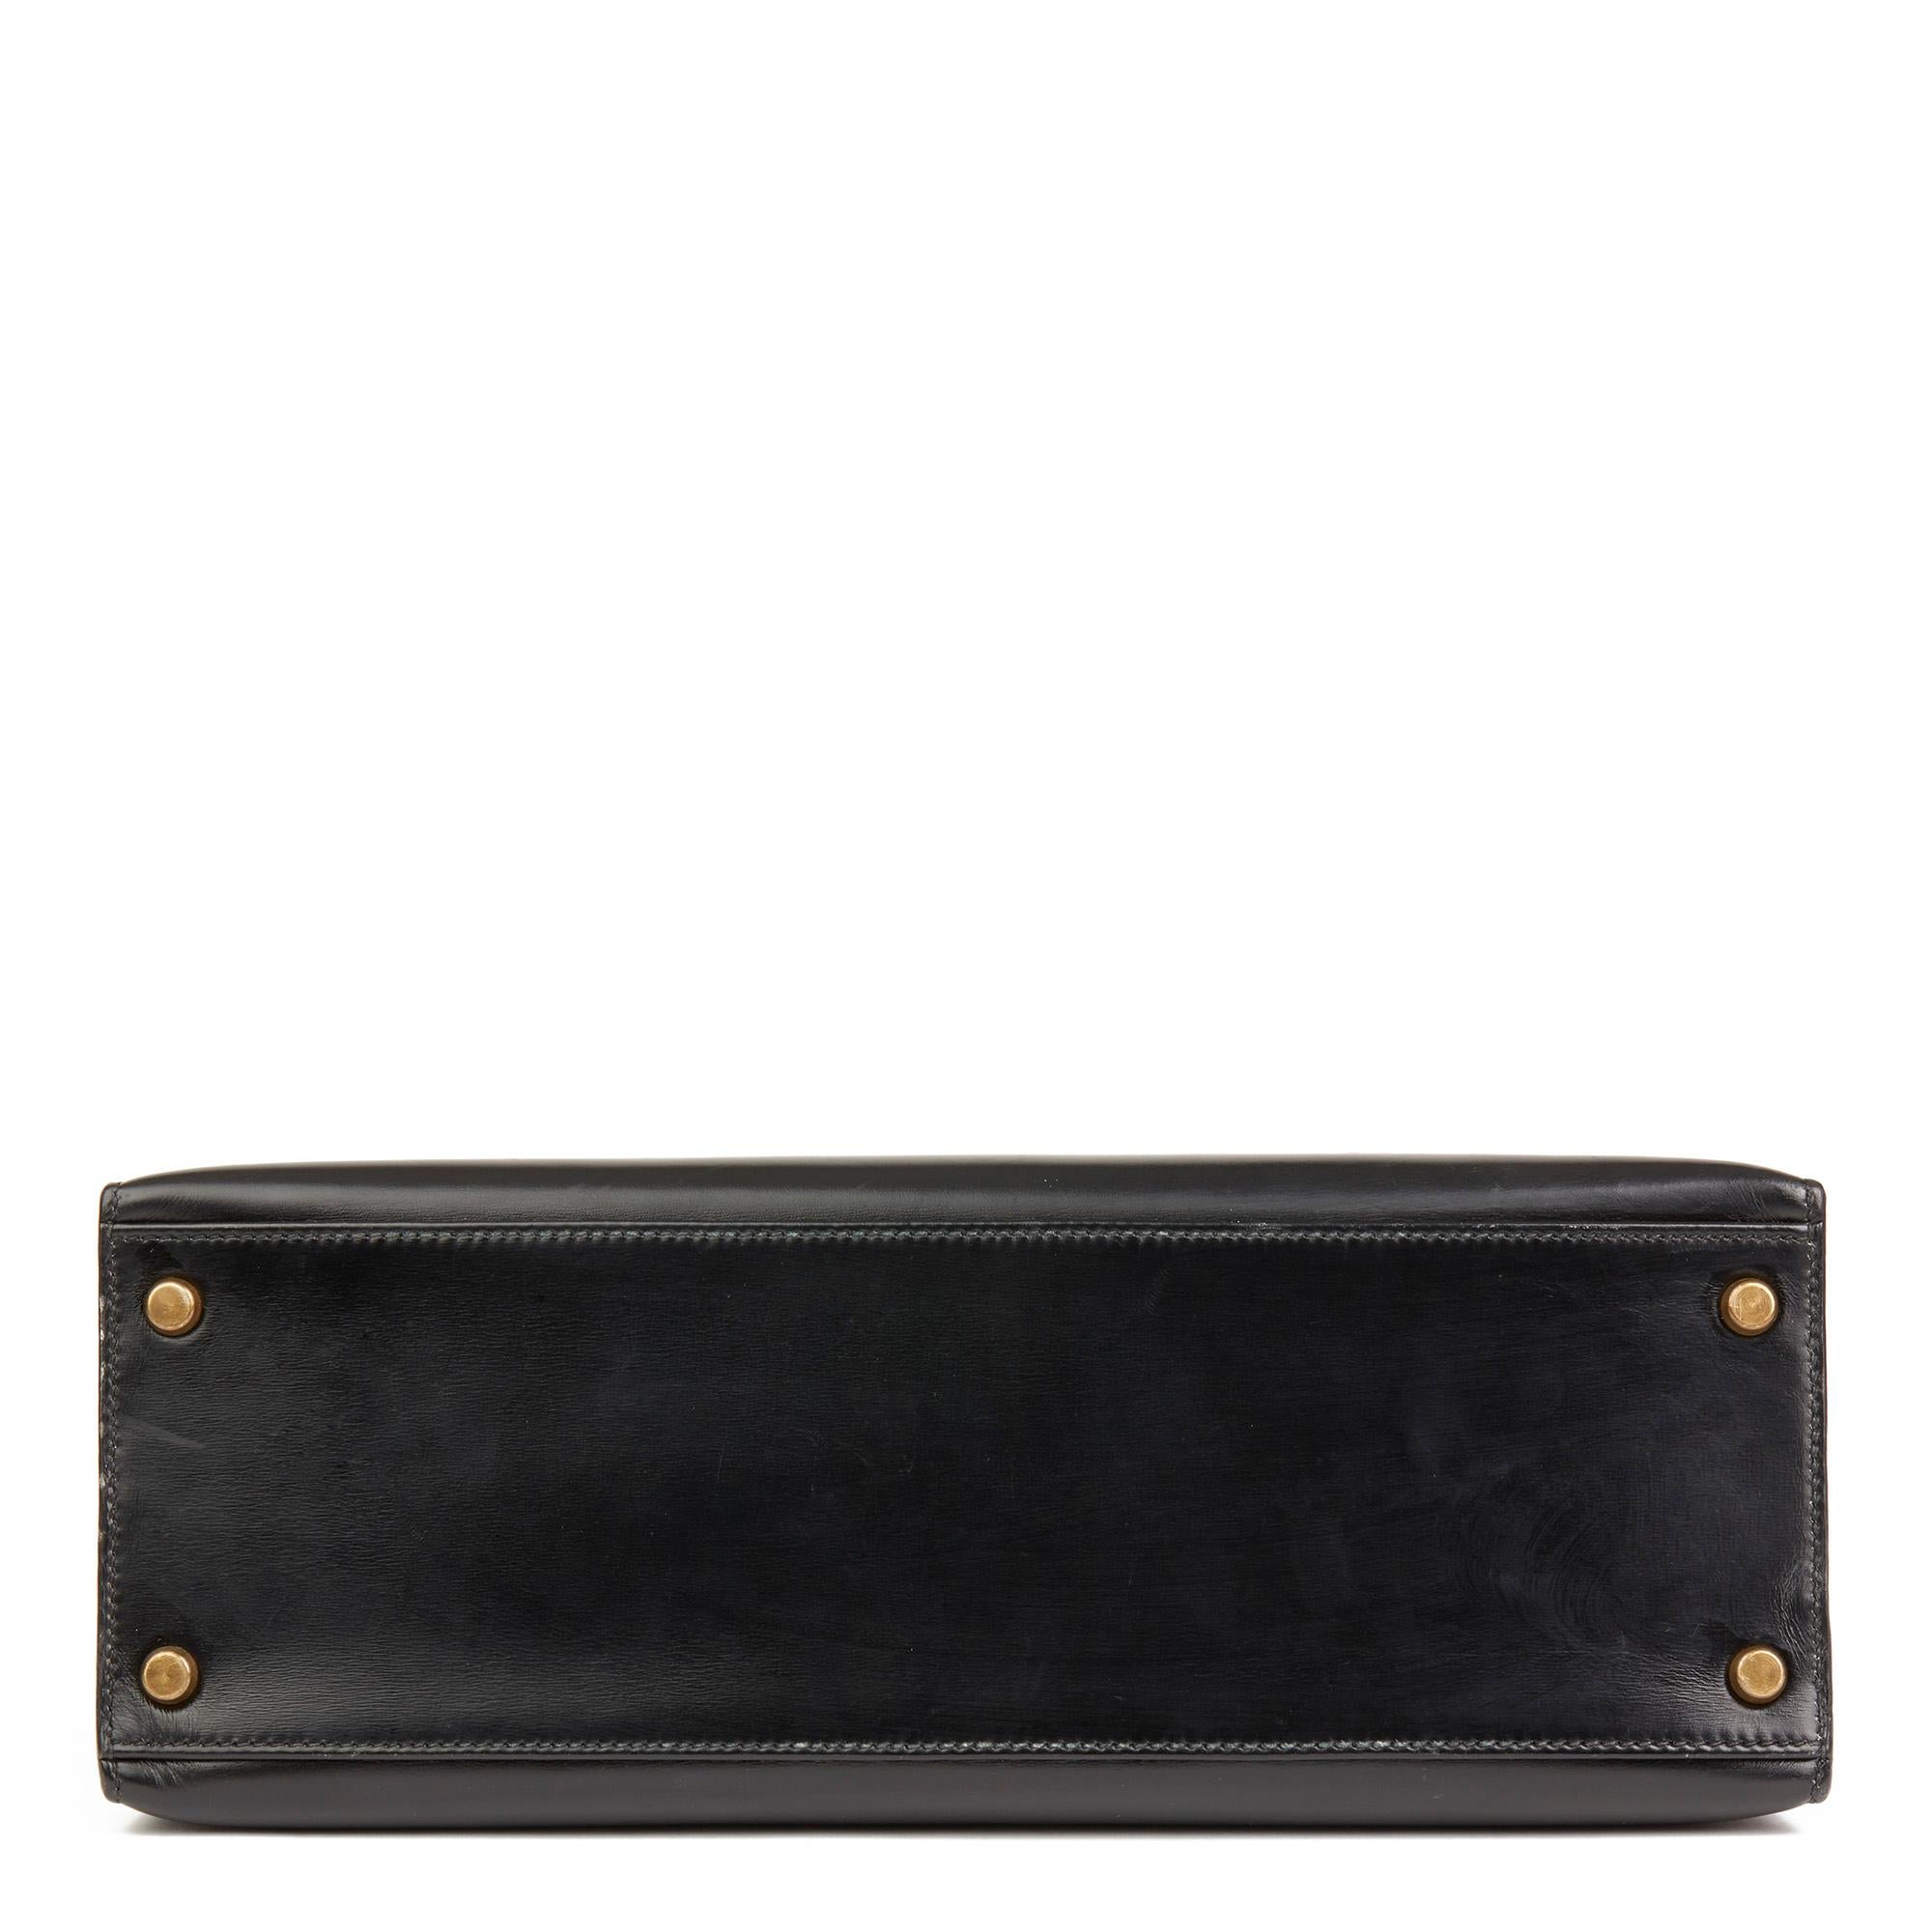 Women's 1989 Hermès Black Box Calf Leather Vintage Kelly 32cm Sellier